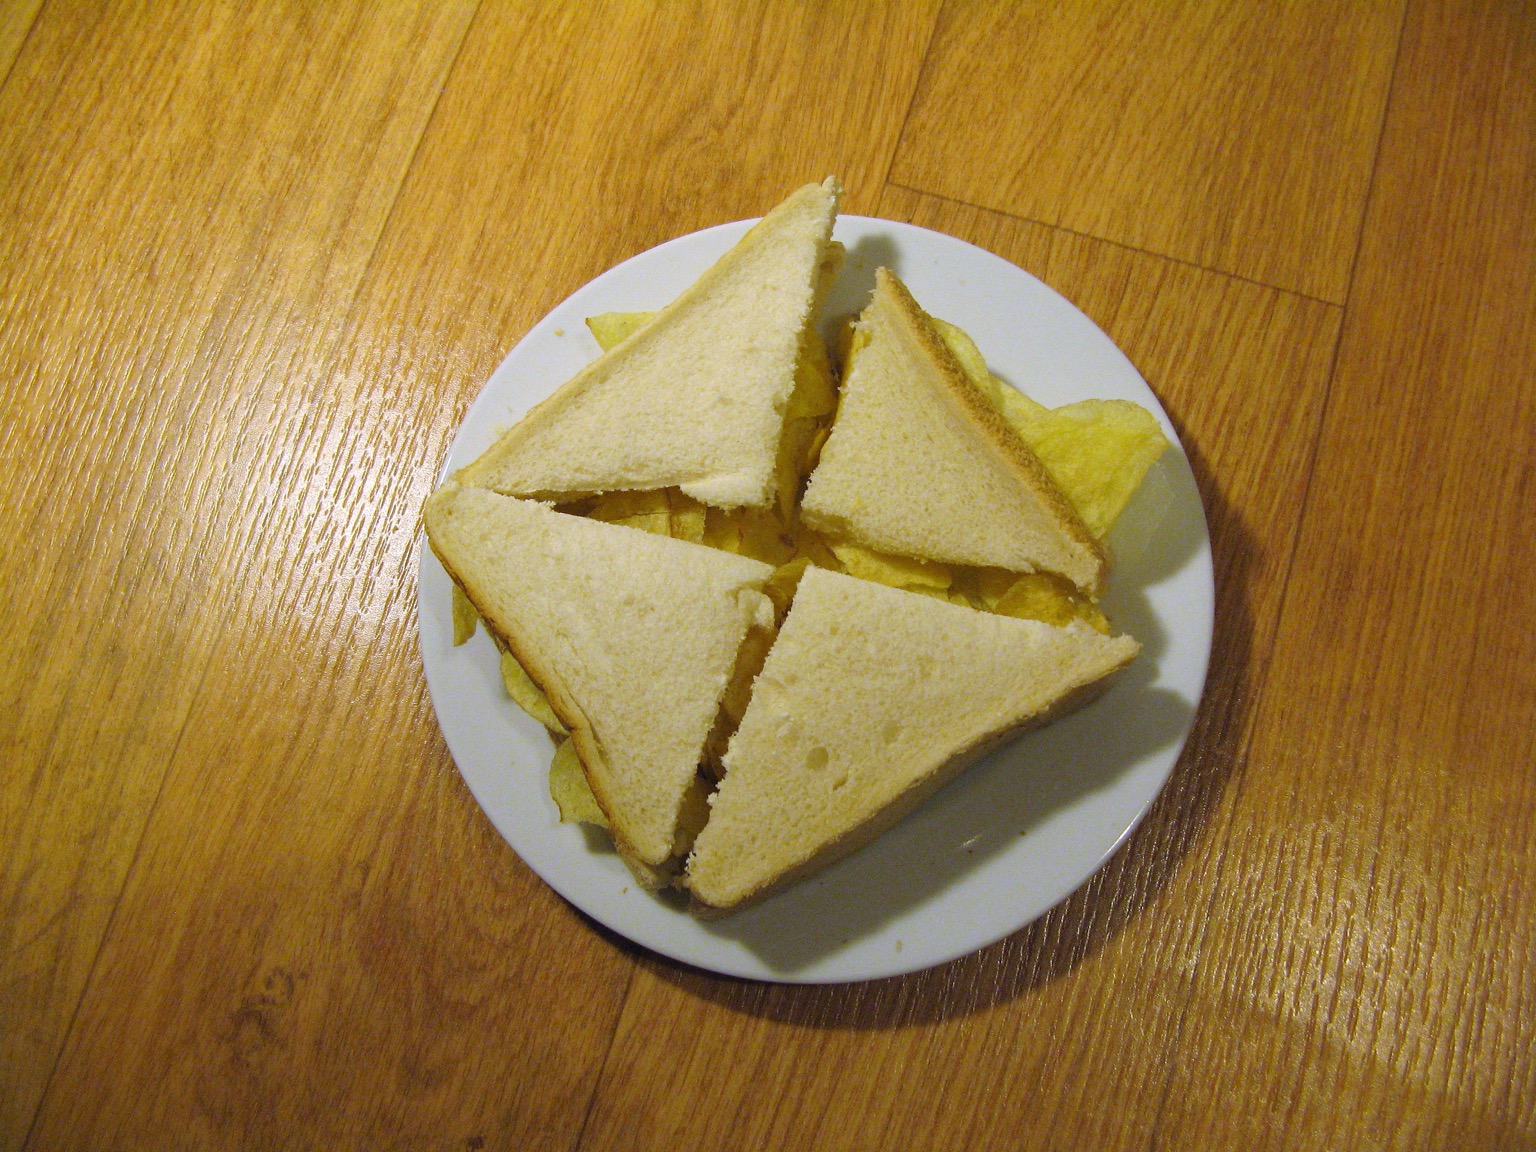 Overhead view of diagonally quartered crisp sandwich